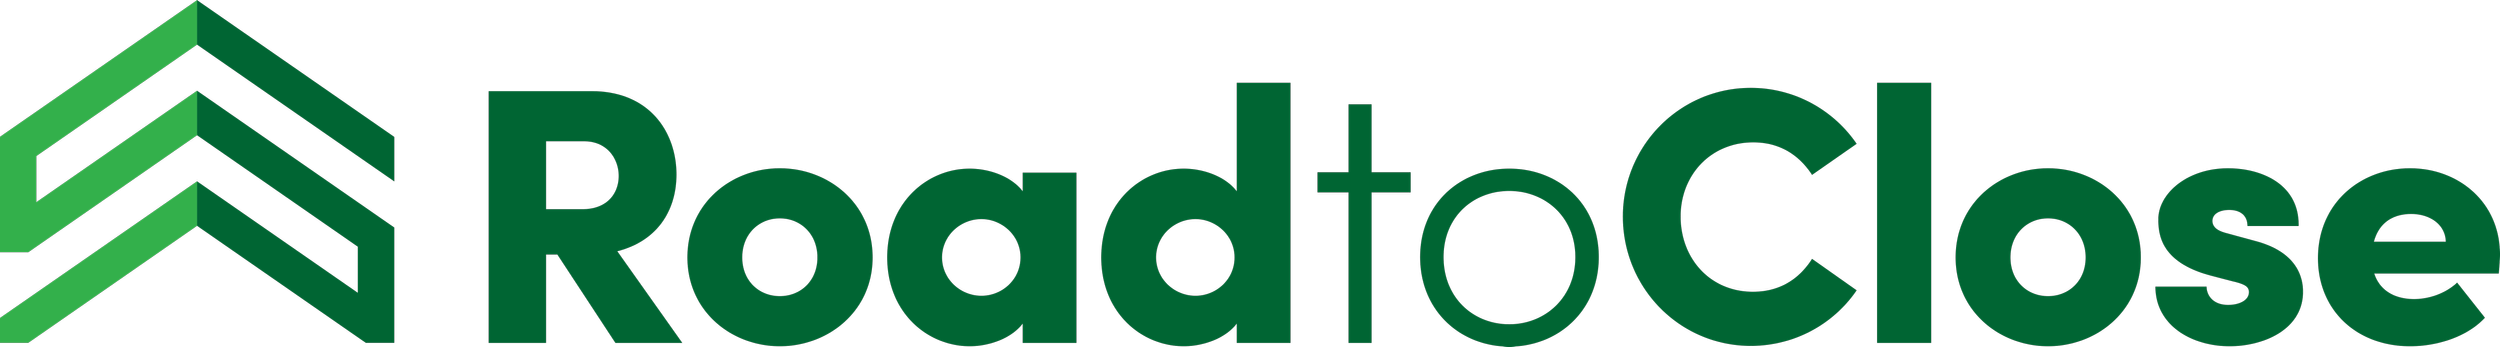 RoadtoClose_Logo.png